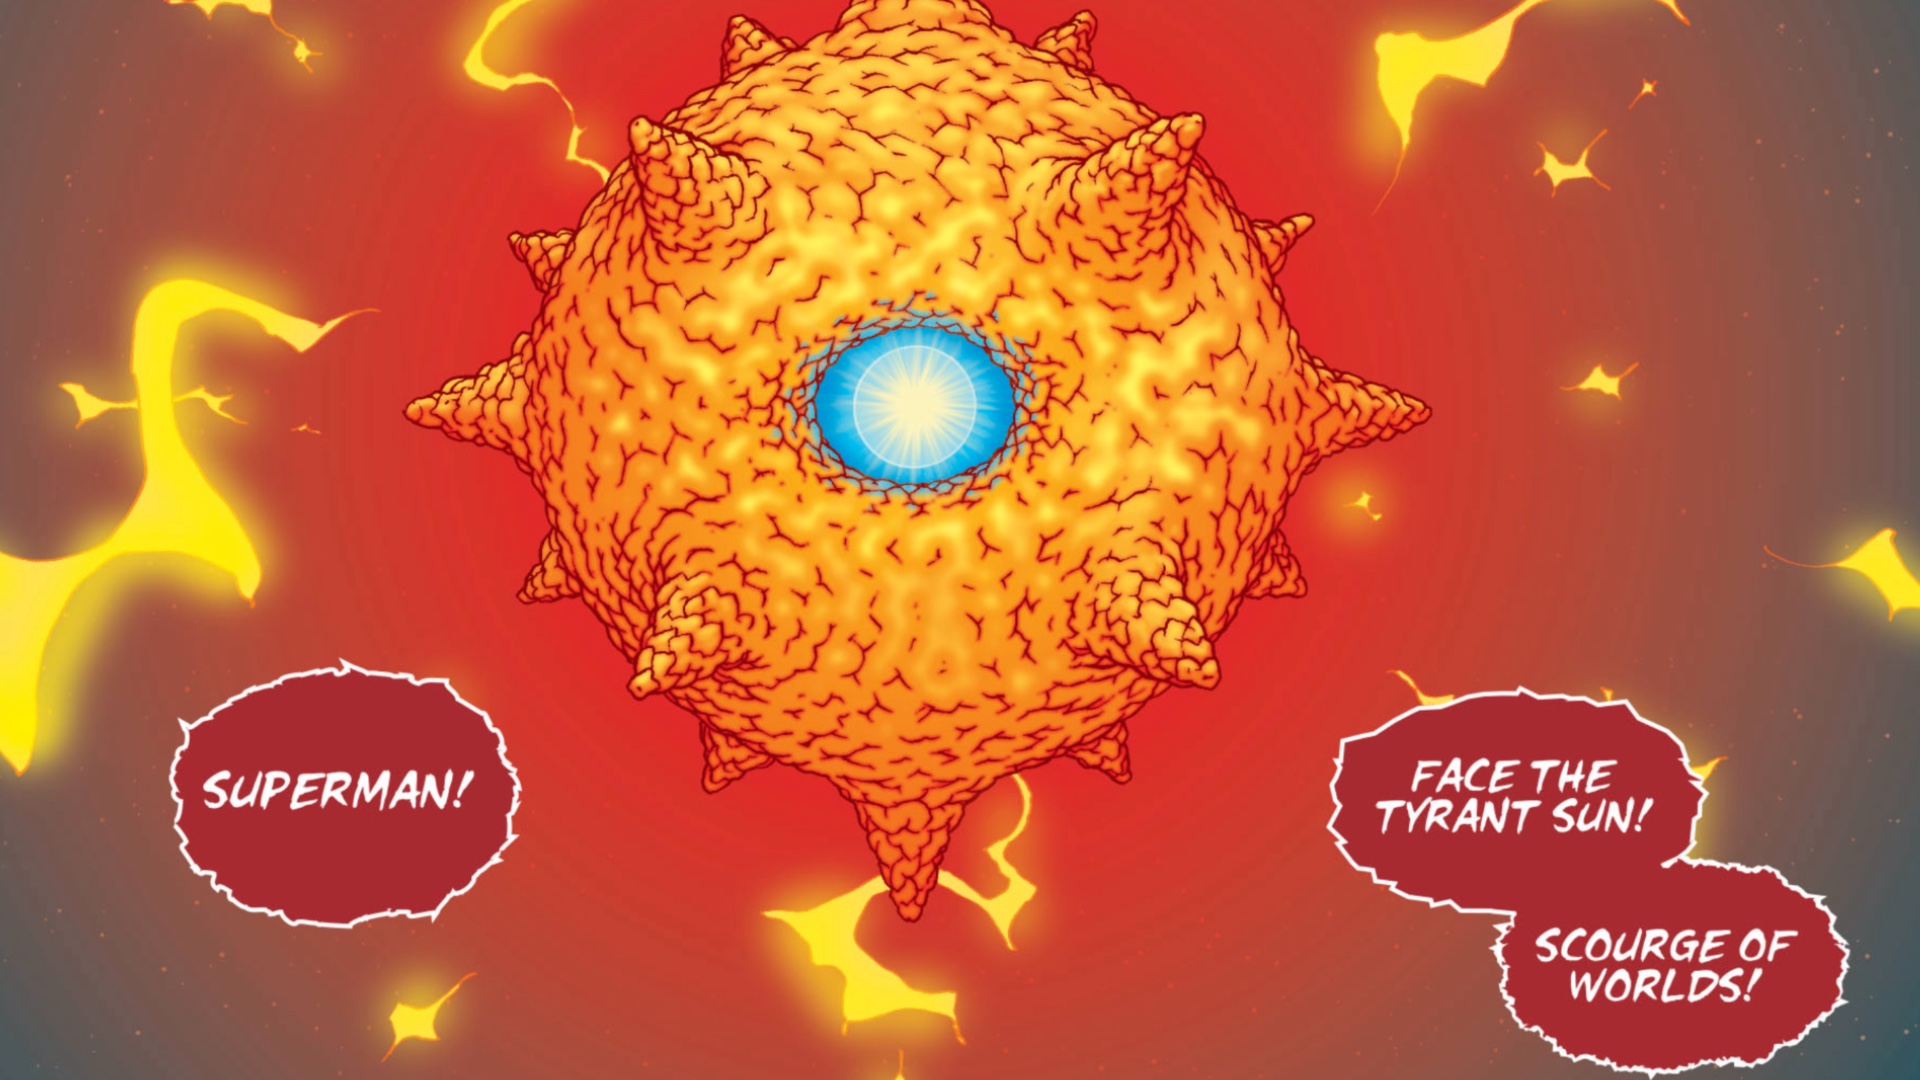 Solaris, the Tyrant Sun in comics